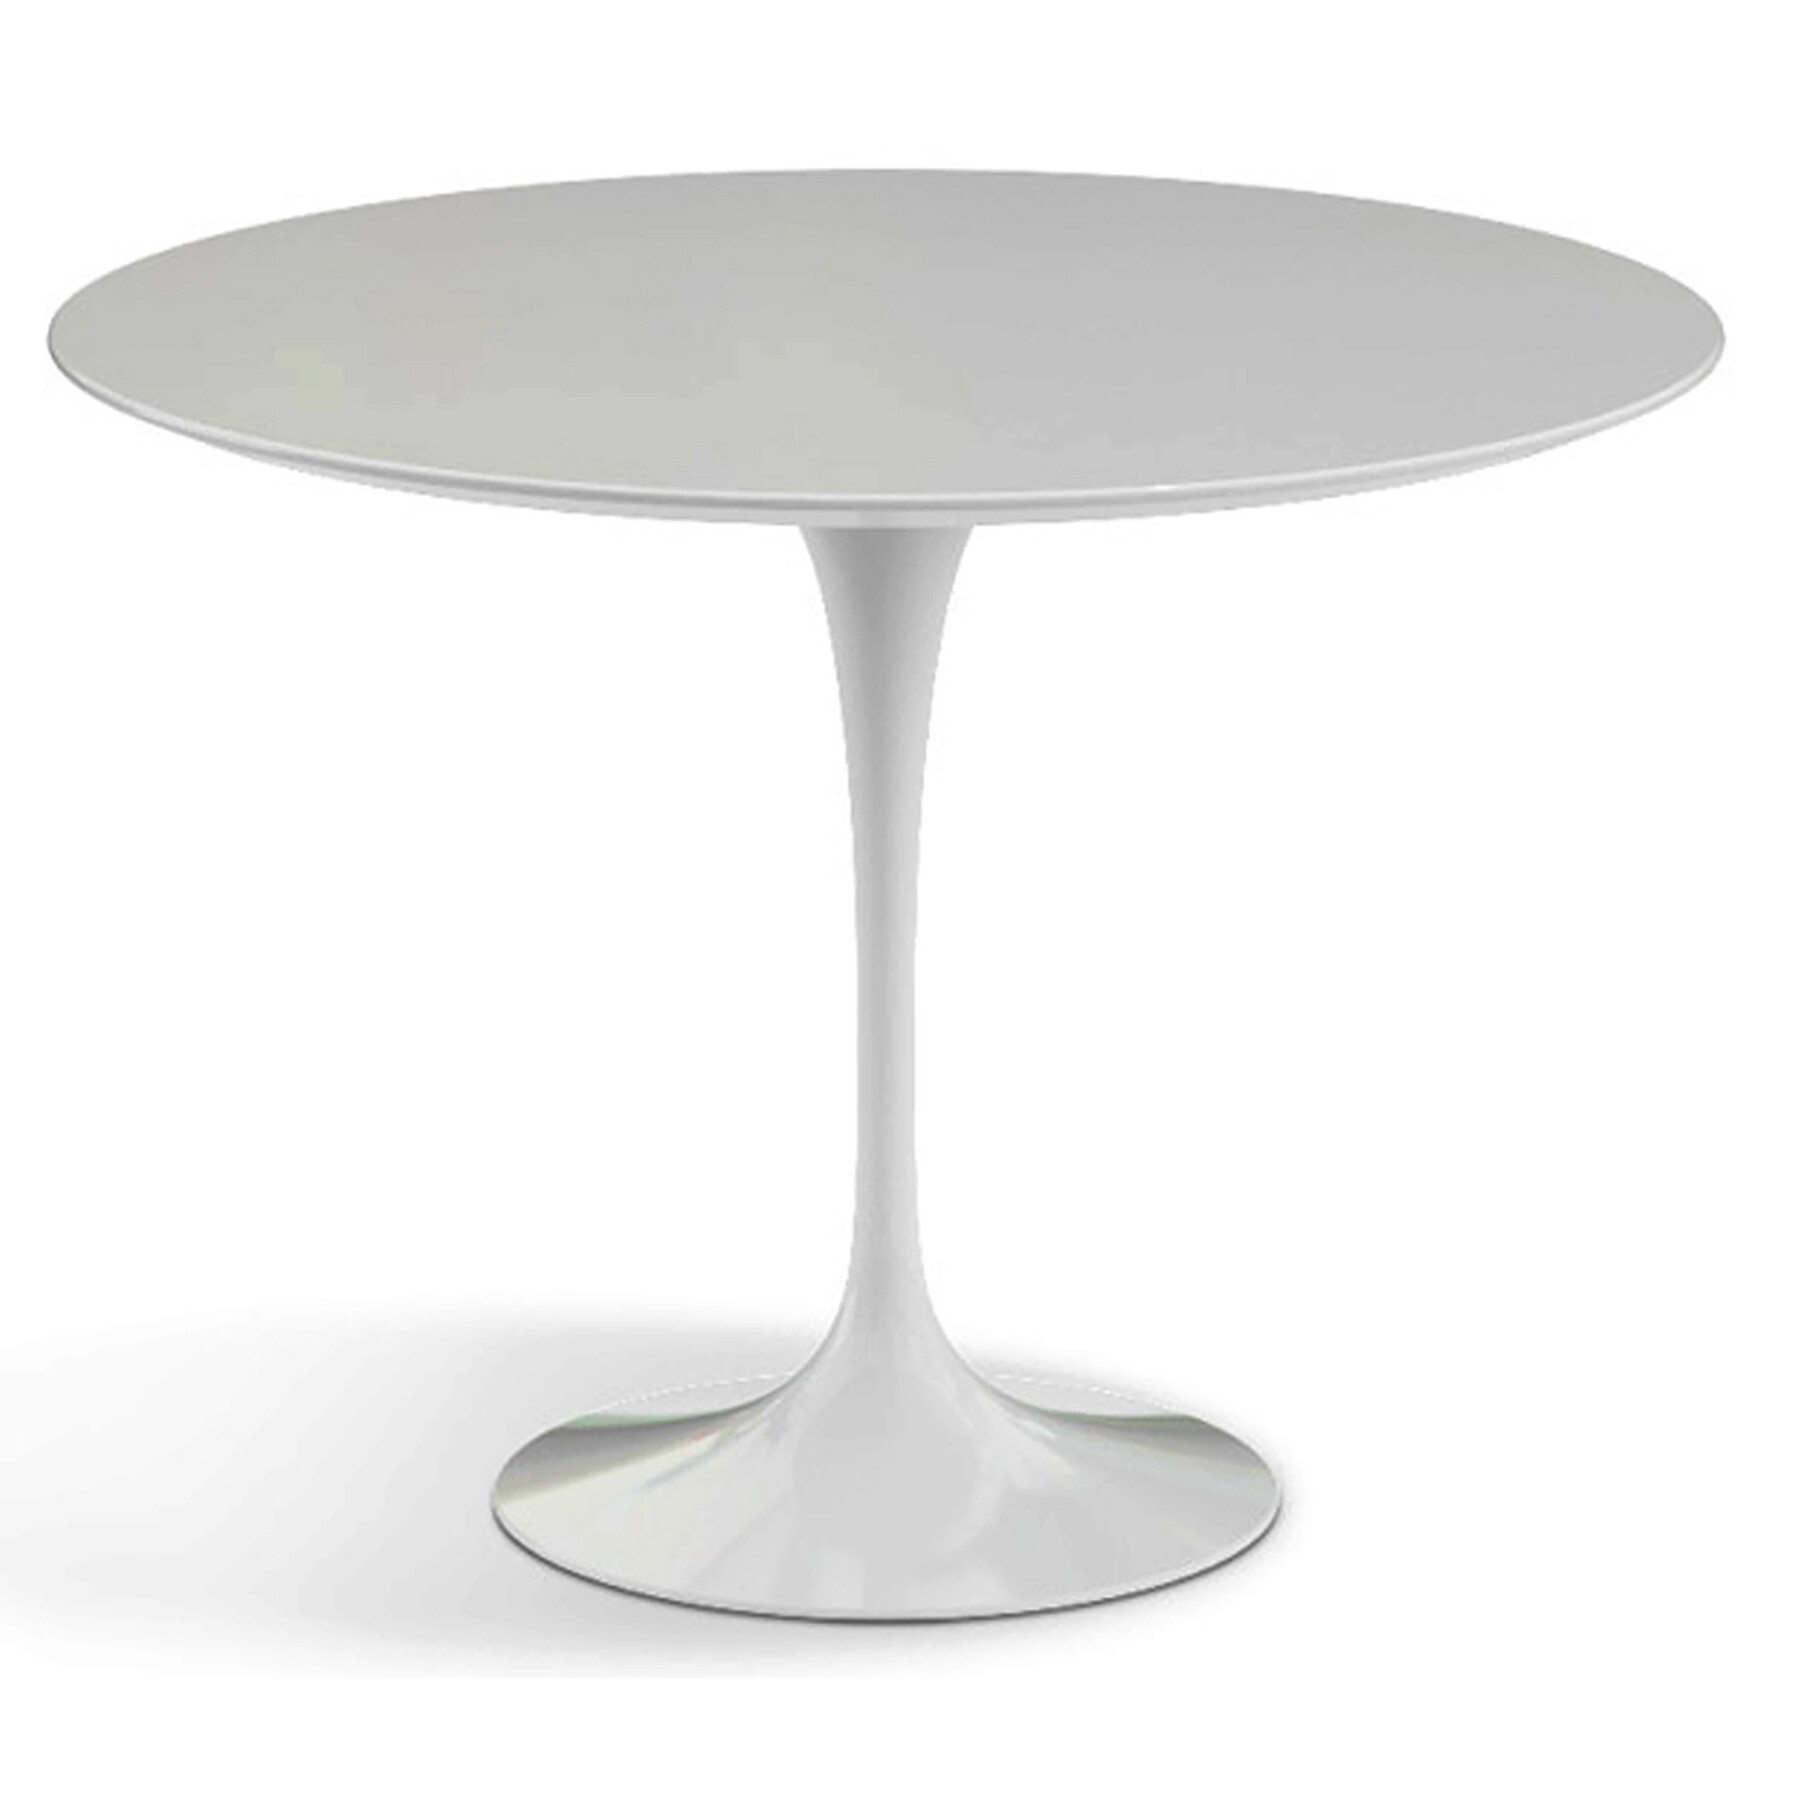 Обеденный стол круглый белый глянцевый 90 см Apriori T